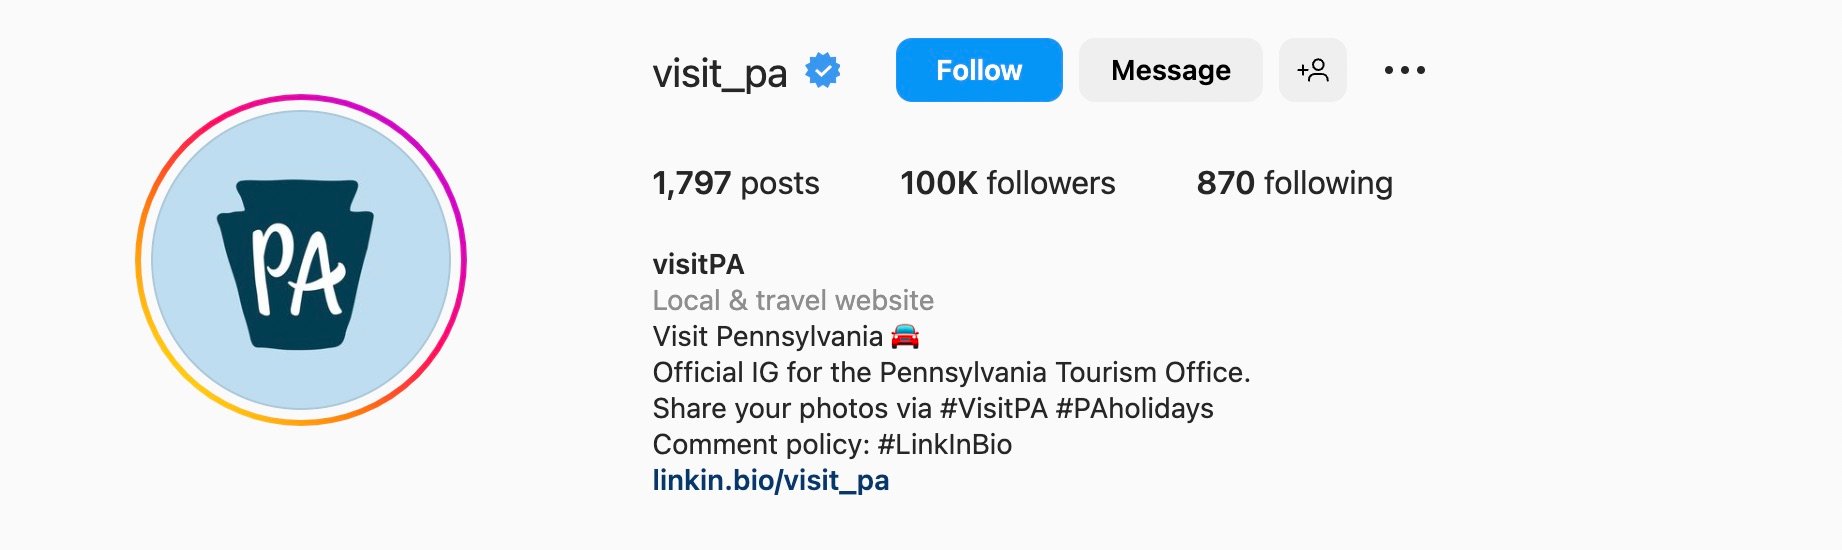 Good Instagram bio ideas for travel, visit pa